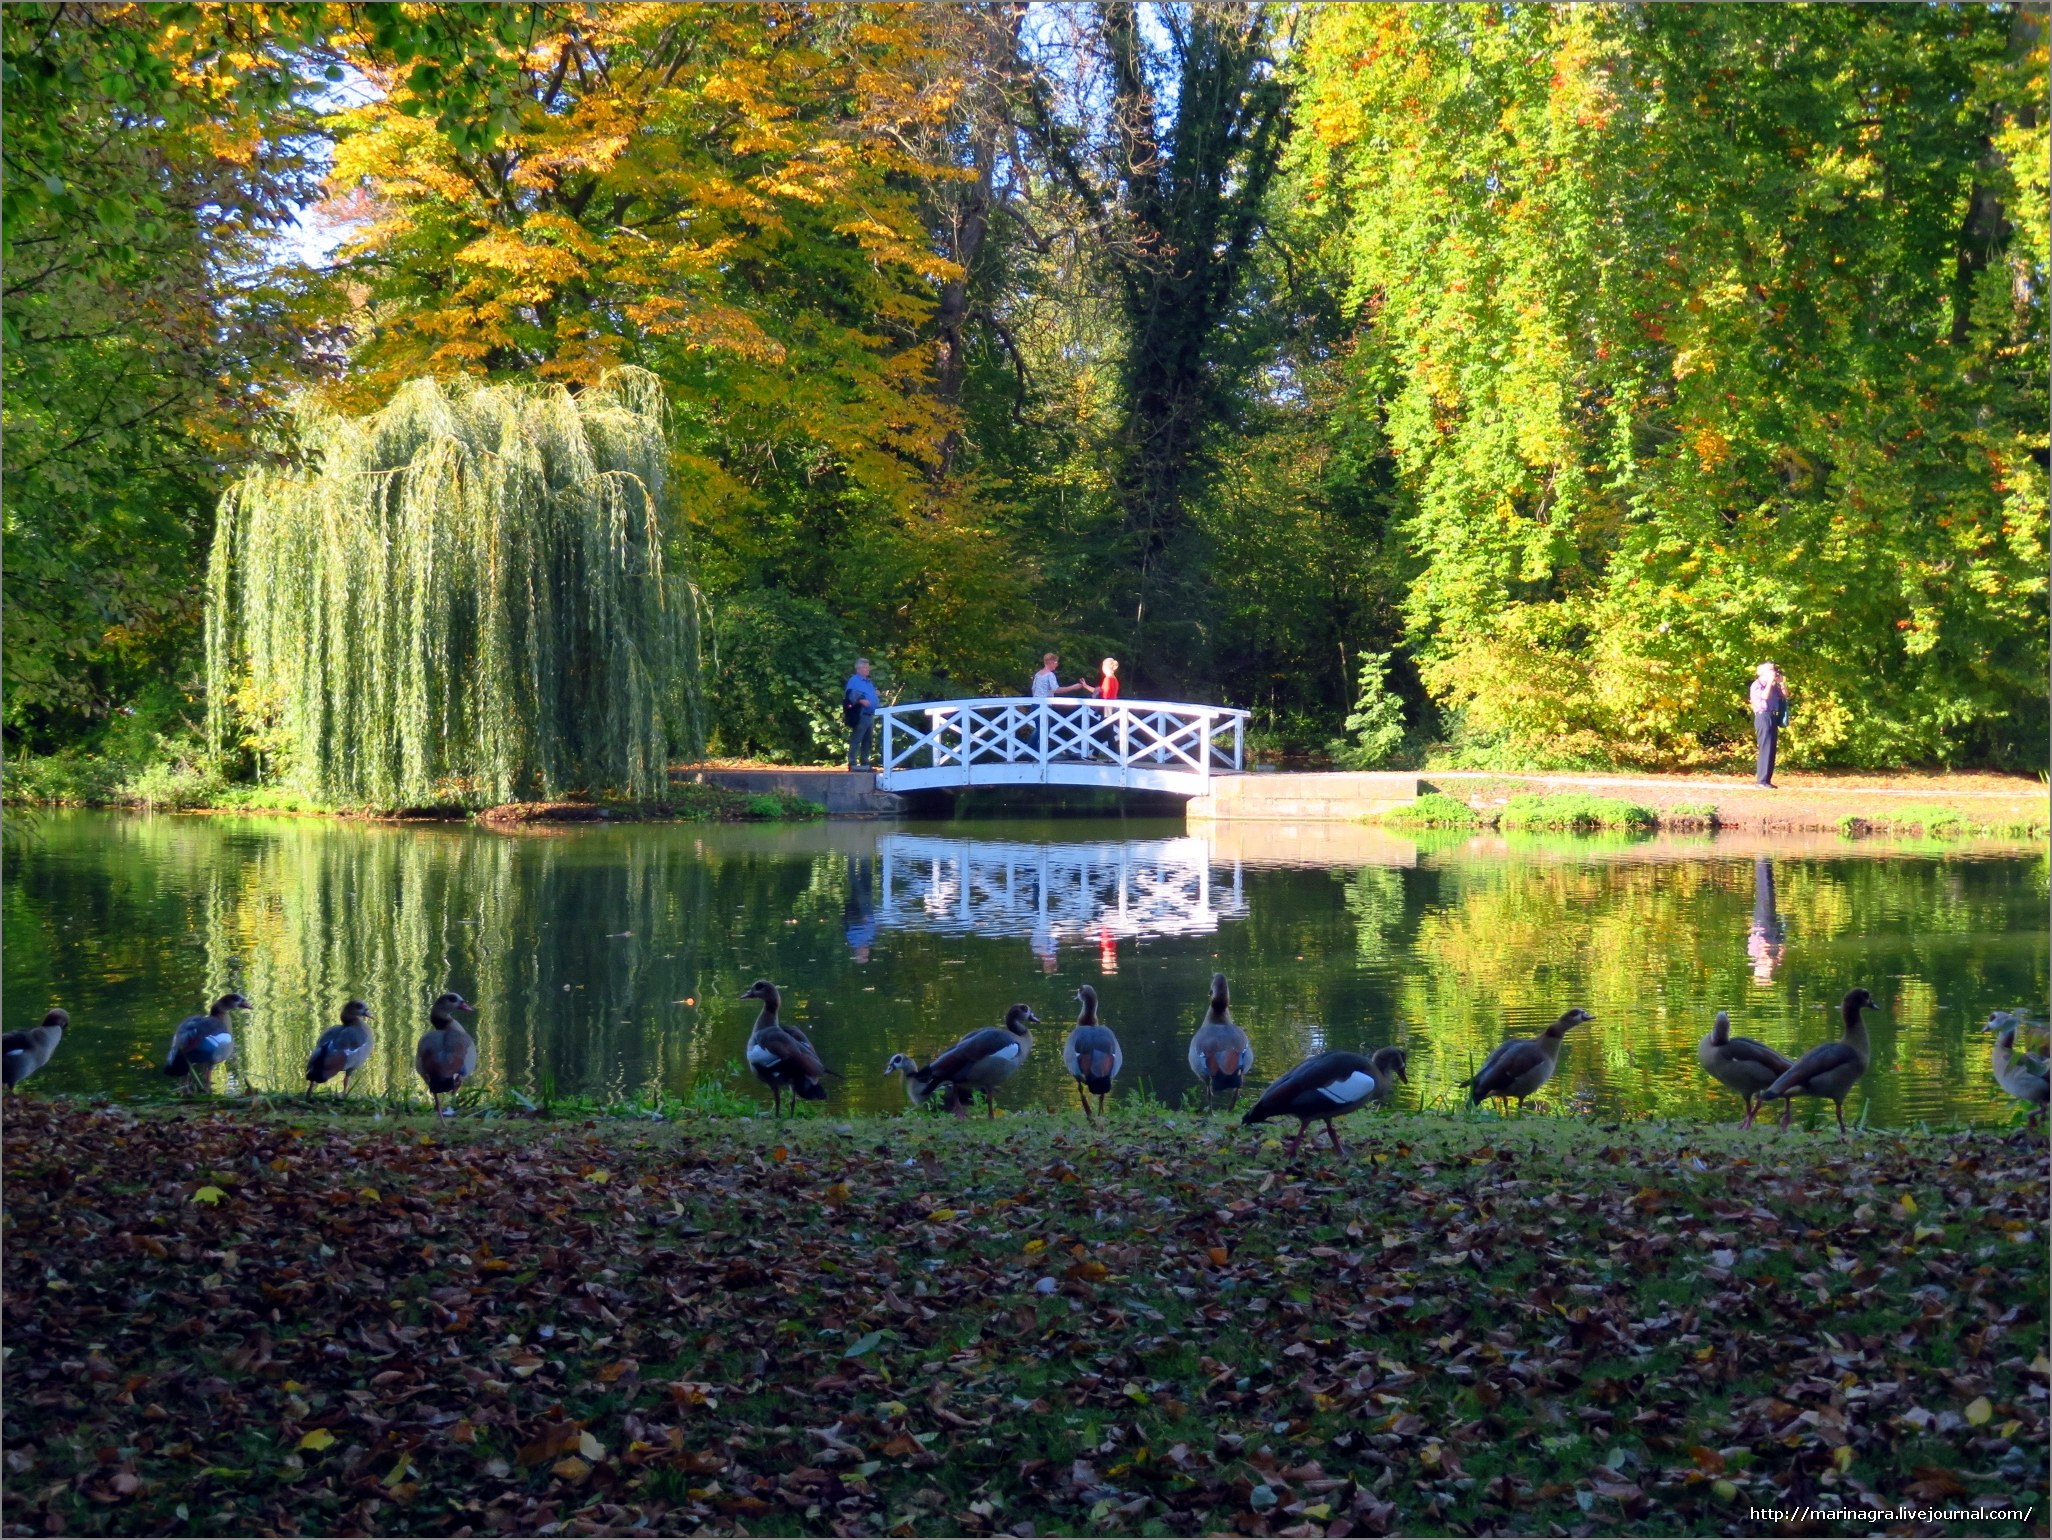 Английский парк картинки. Парк Стоурхед Англия. Английский сад пейзажный парк. Английский пейзажный парк Англия. Английский пейзажный парк 19 века.